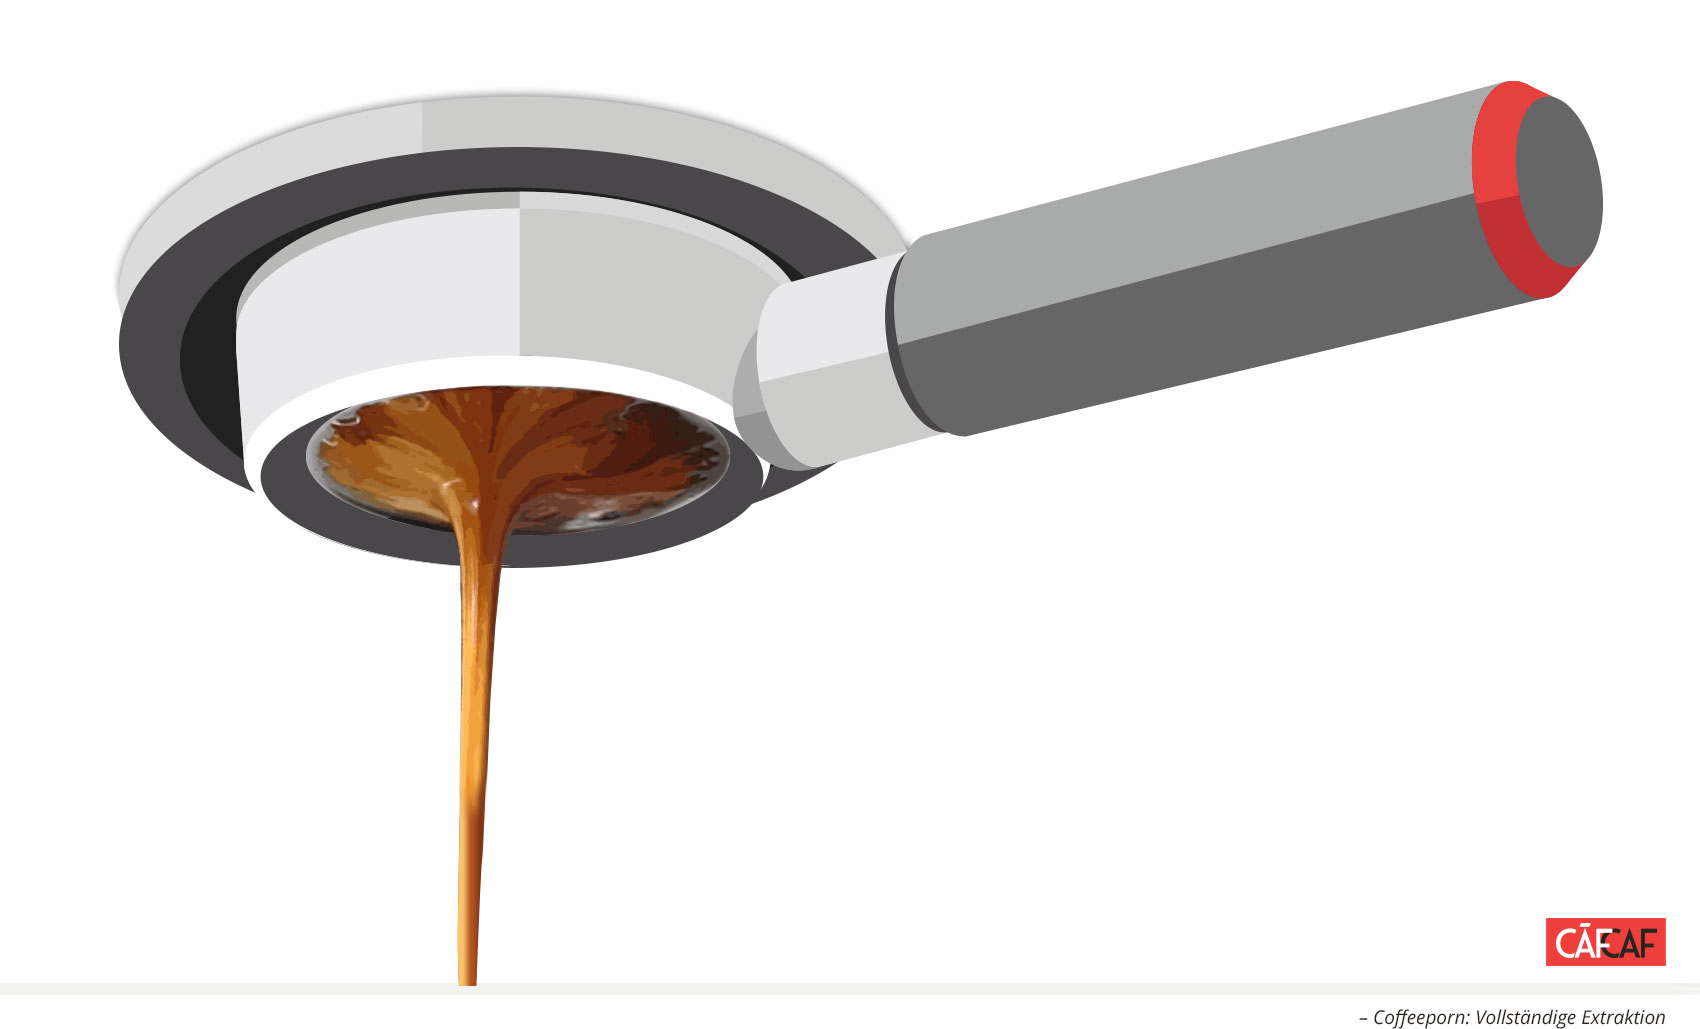 Coffeeporn: vollständige Extraktion. CafCaf – Kaffee & Blog, Kaffeeblog